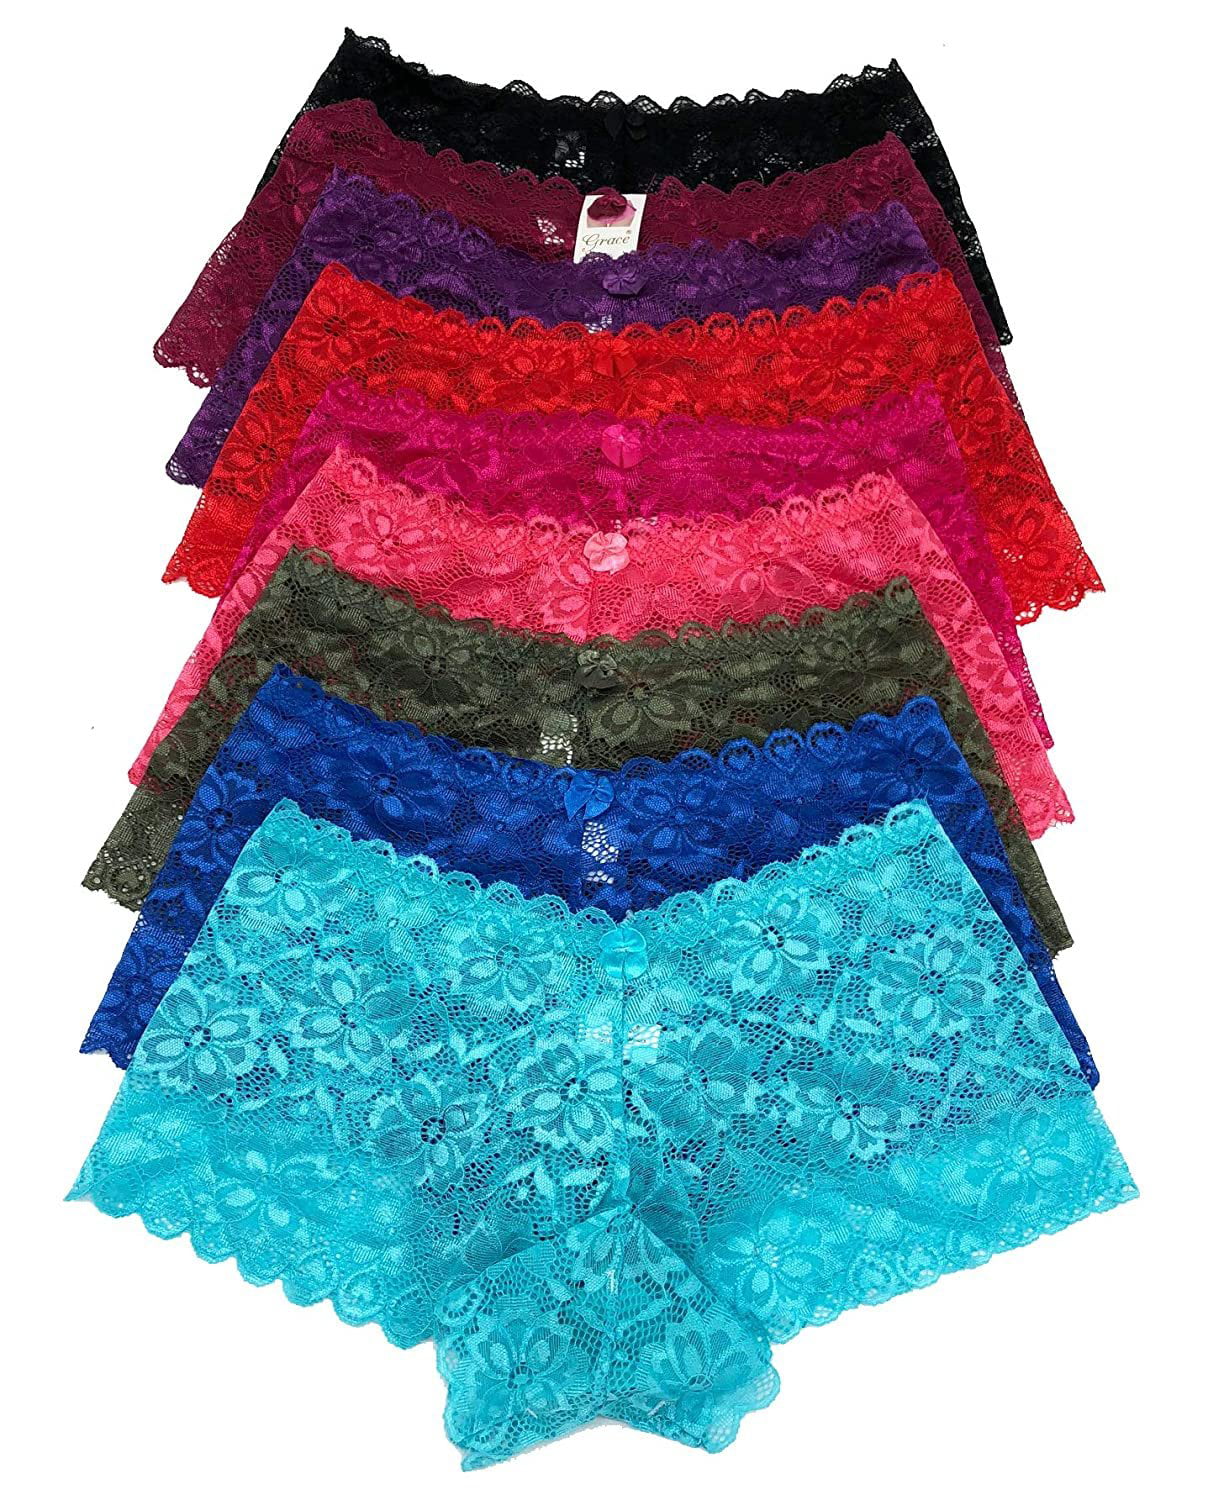 Iheyi 6 Pack of Womens Regular & Plus Size Lace Boyshort Panties Panty Underwear 